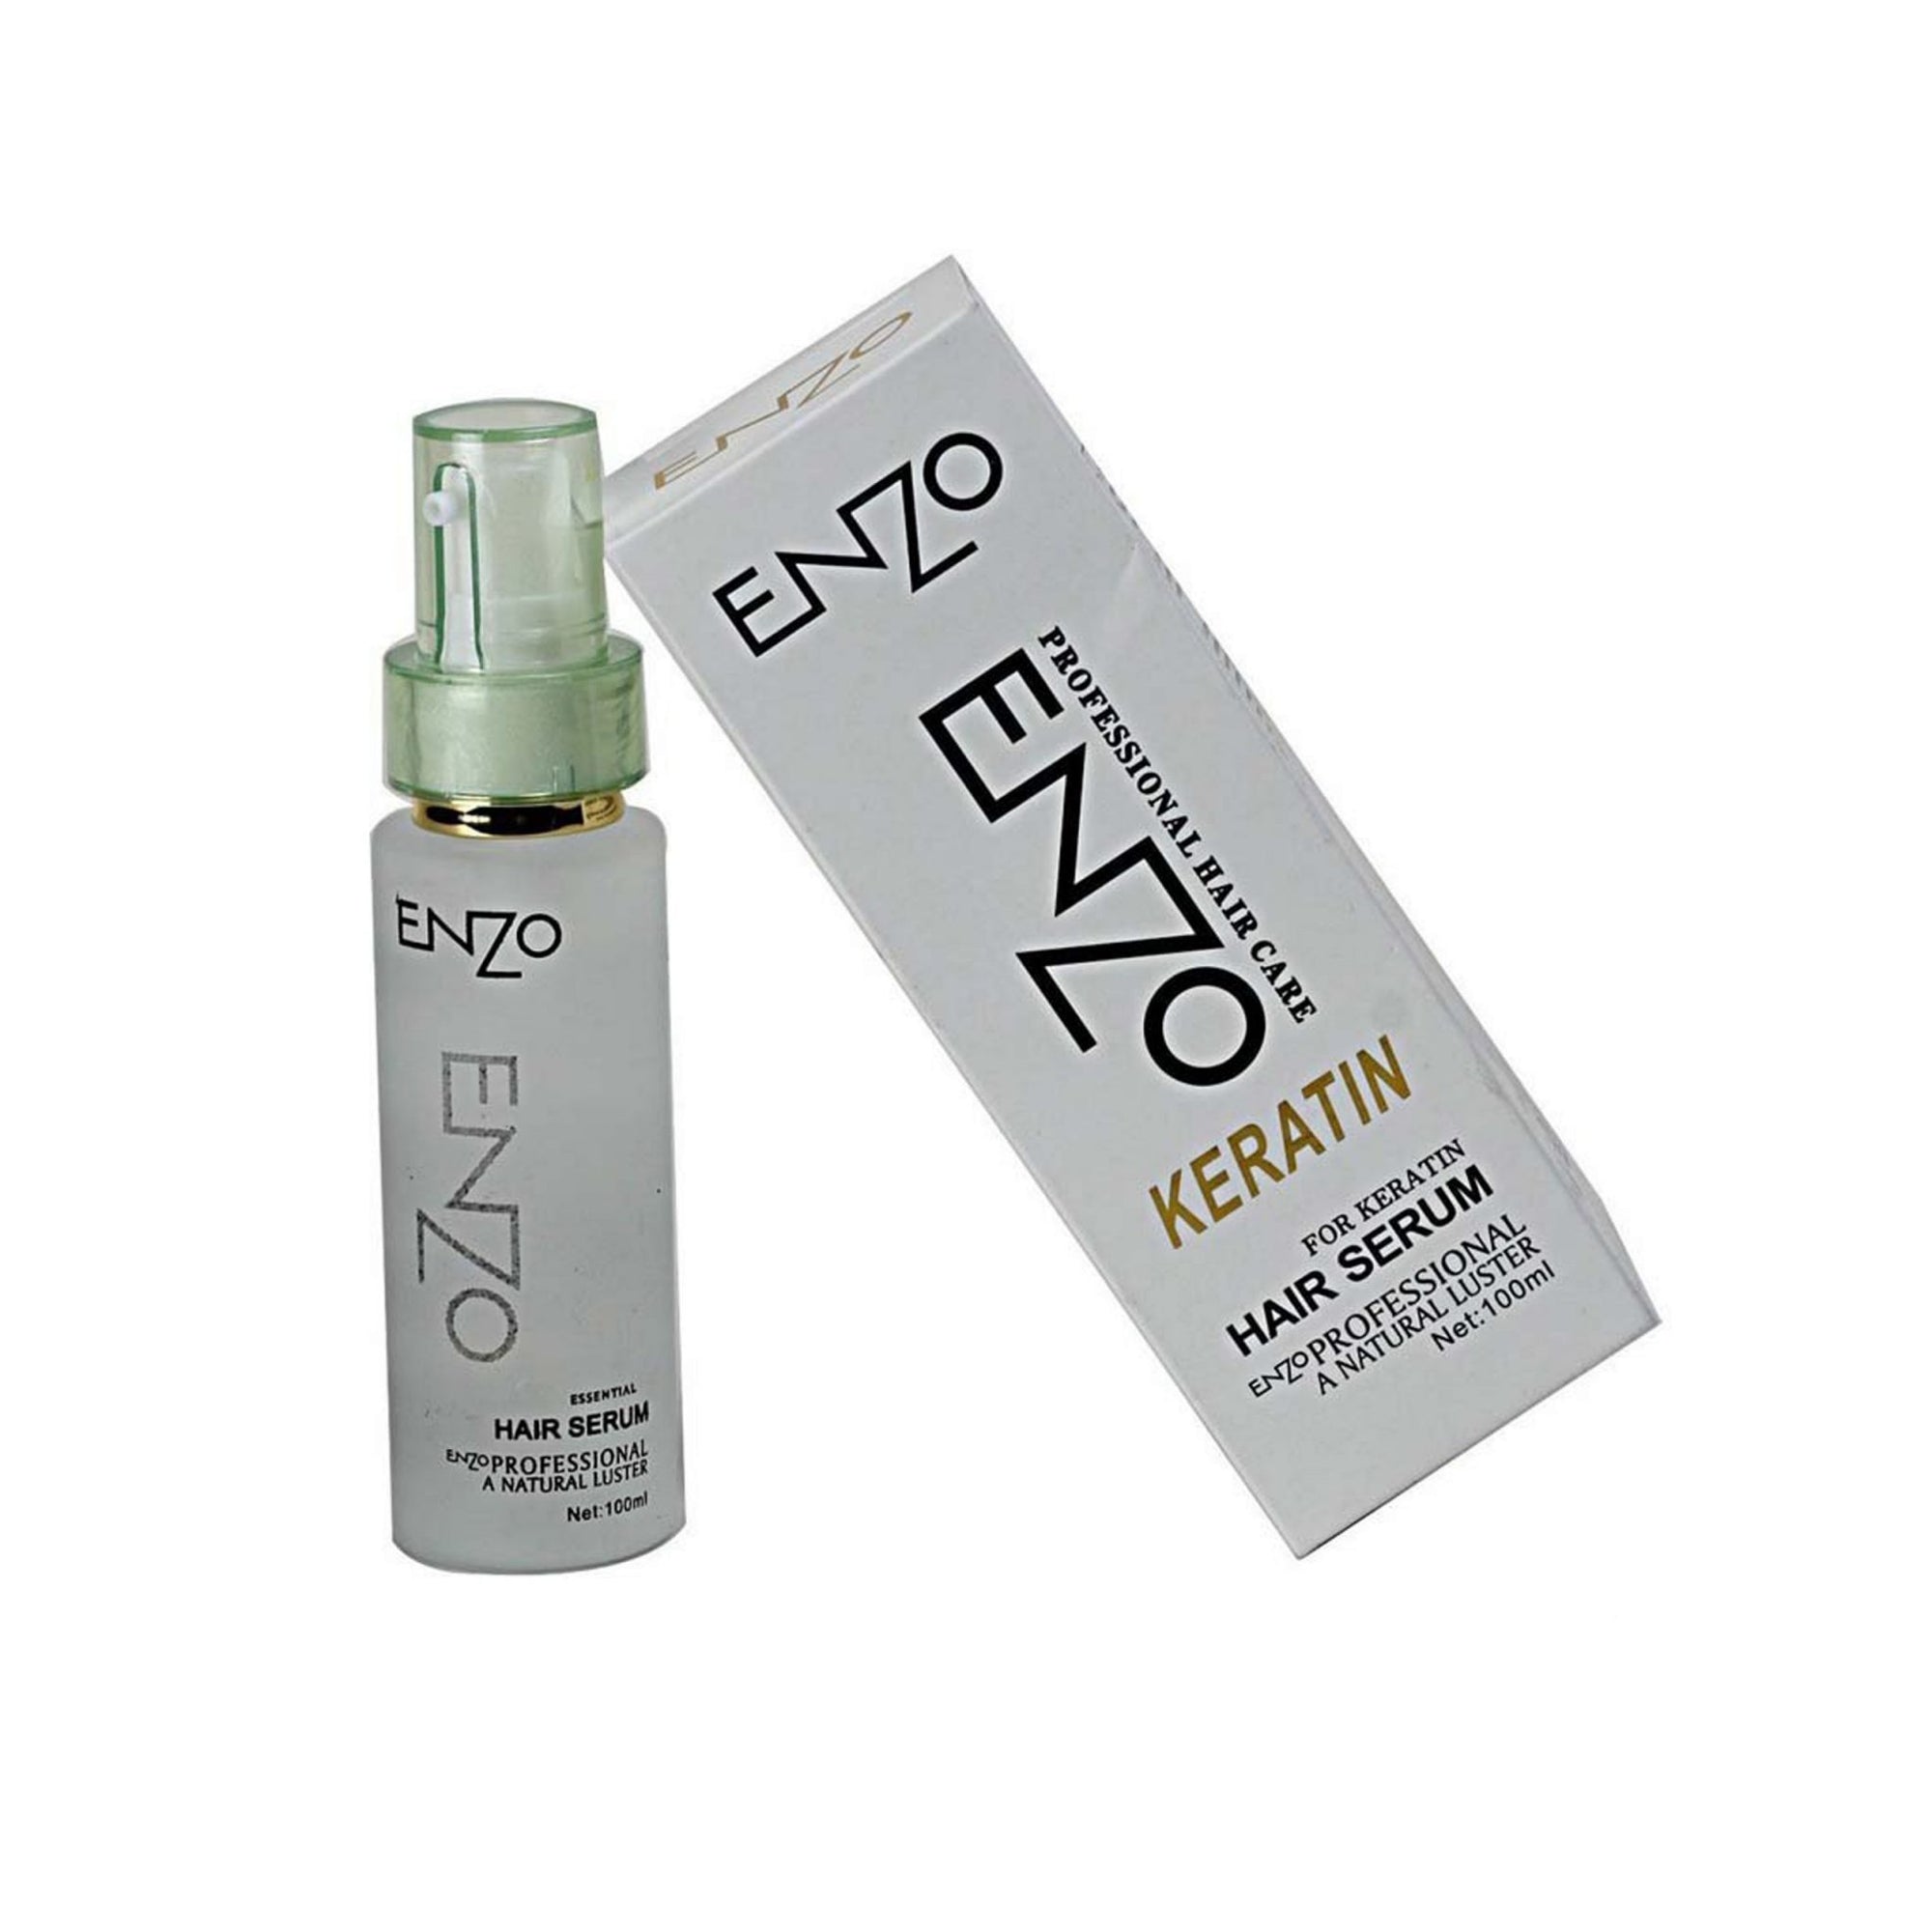 Enzo Keratin & Protein Hair Serum 100ml freeshipping - lasertag.pk